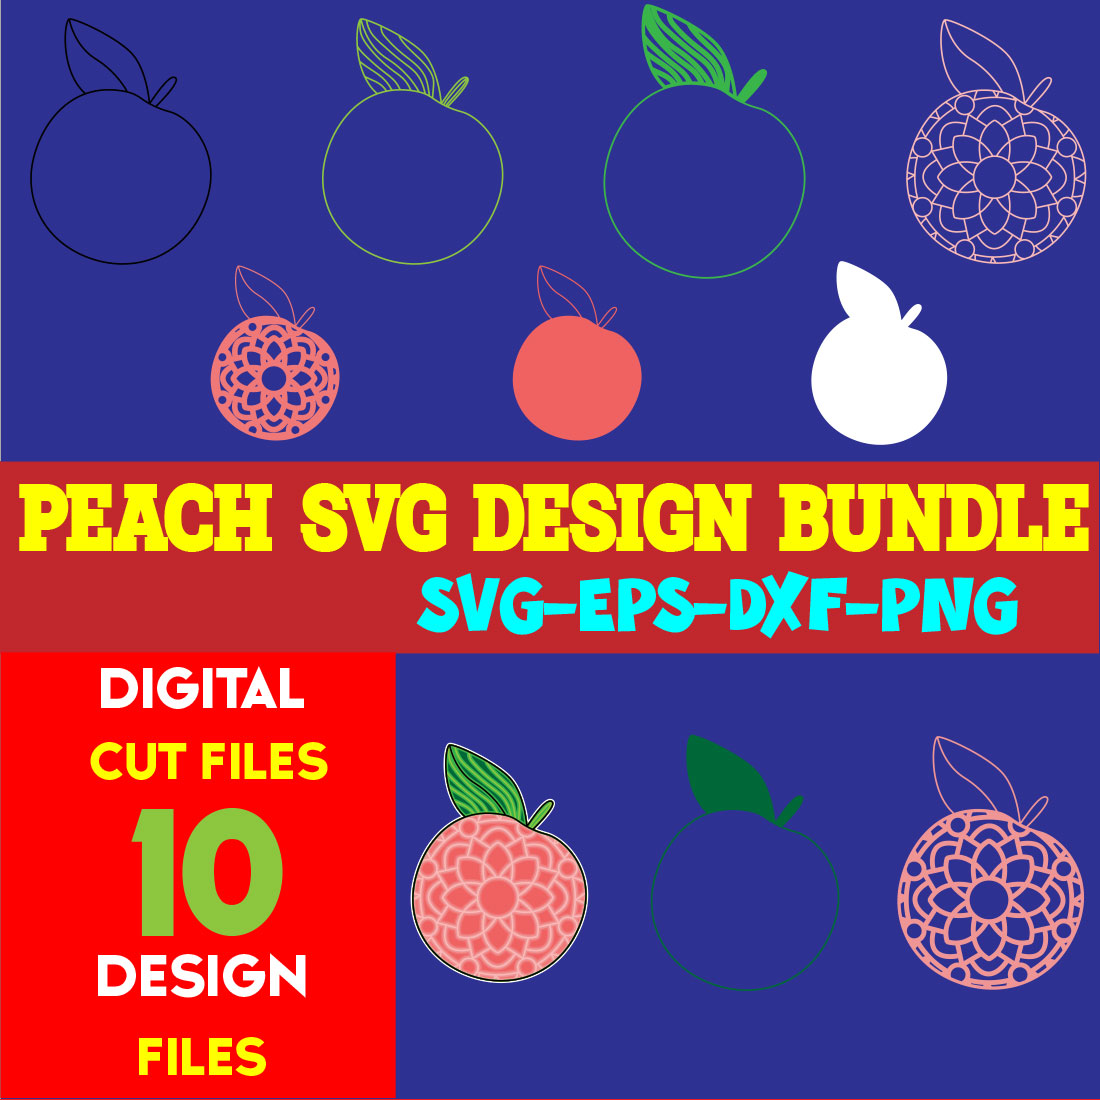 Peach SVG Design Bundle cover image.